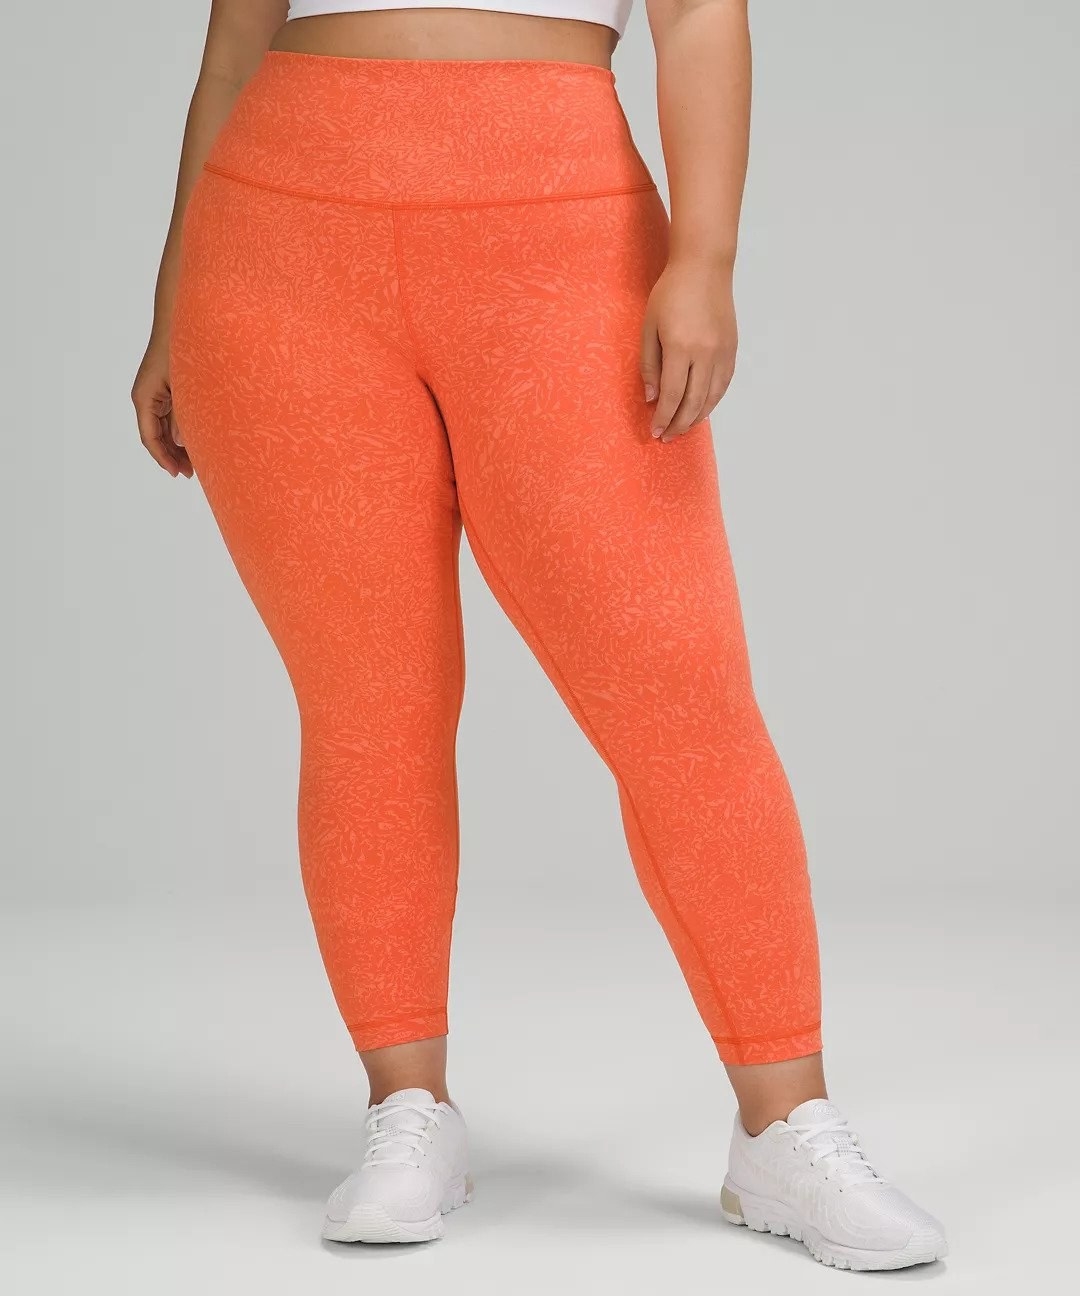 Model wearing the orange leggings